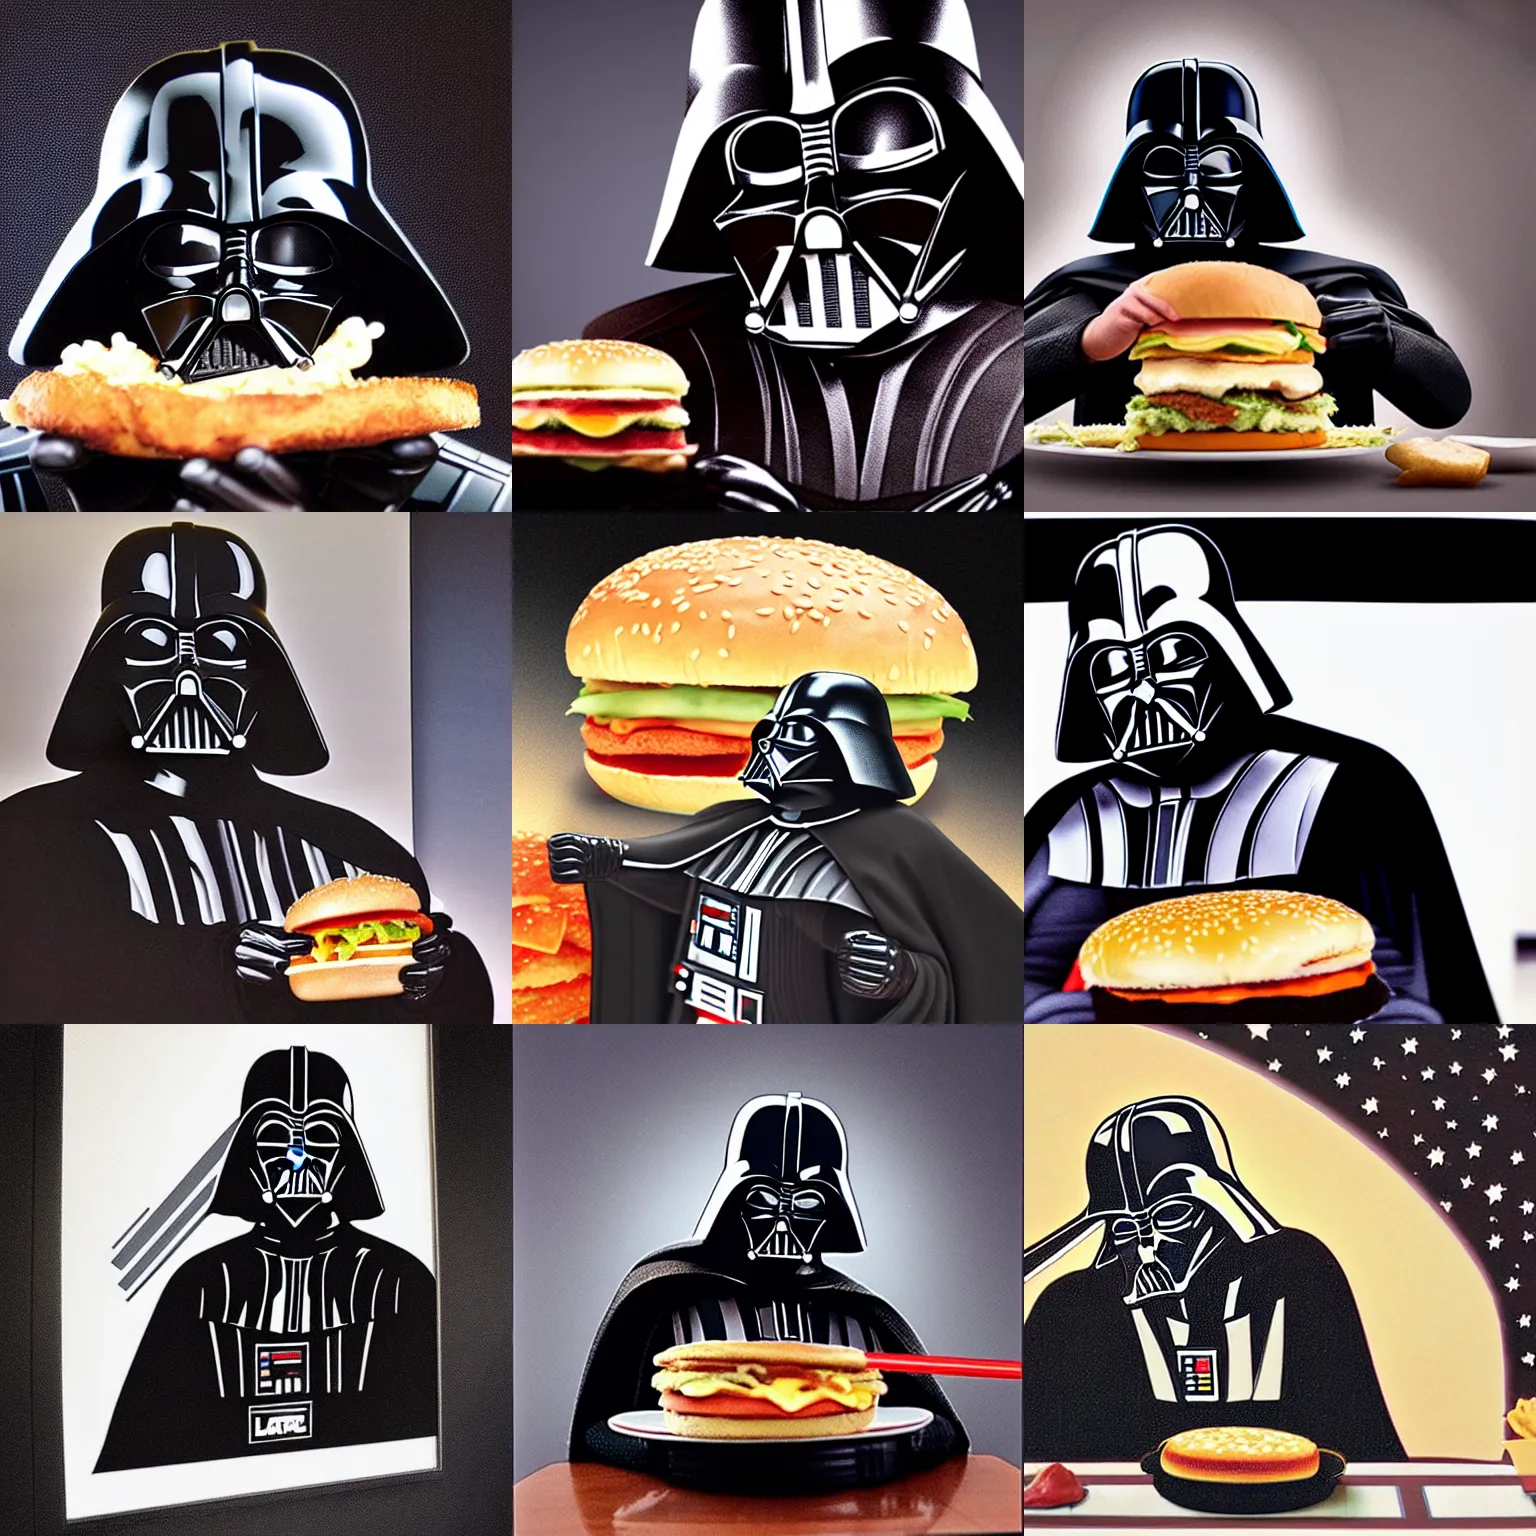 Prompt: Darth Vader eating a Big Mac, photo realistic, award-winning, highly-detailed